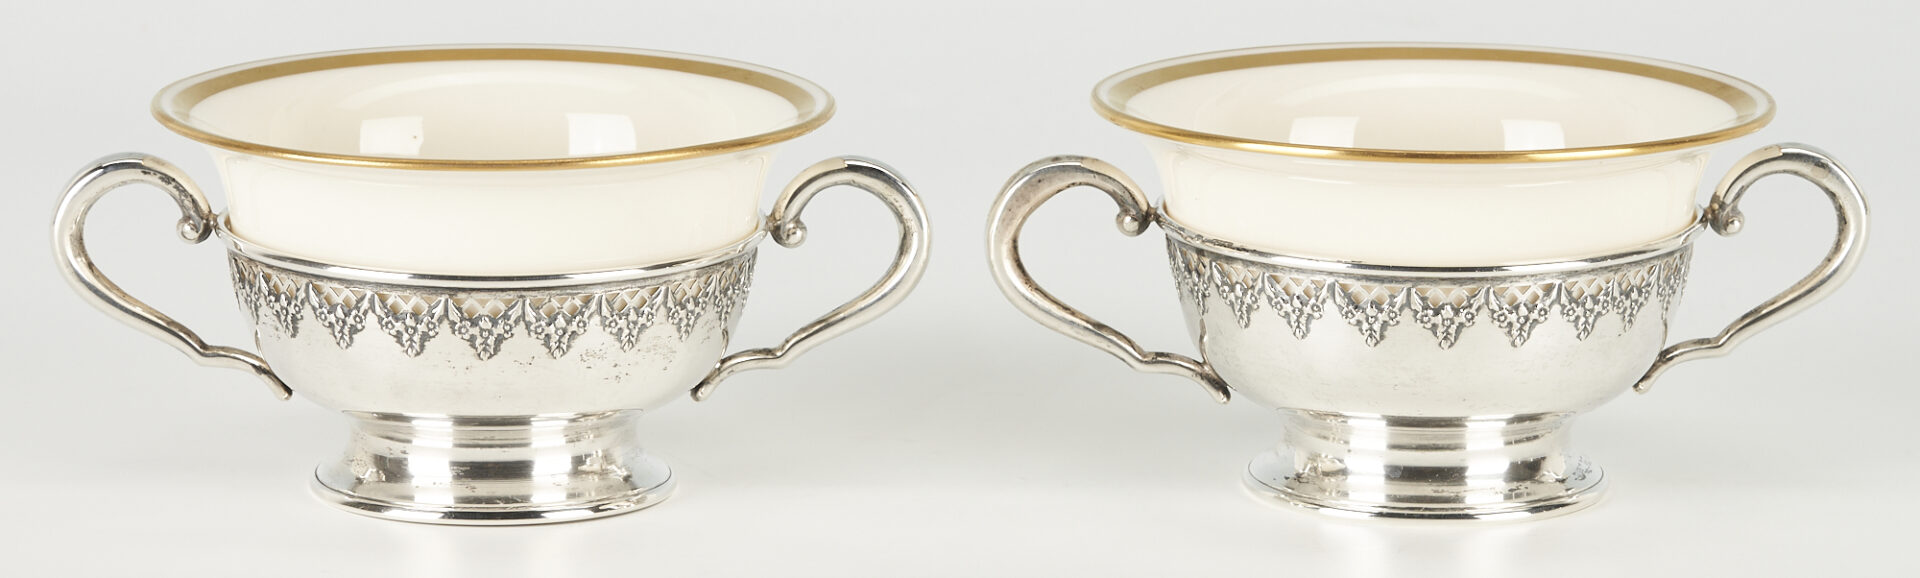 Lot 803: 12 International Sterling & Lenox Porcelain Soup Bowls